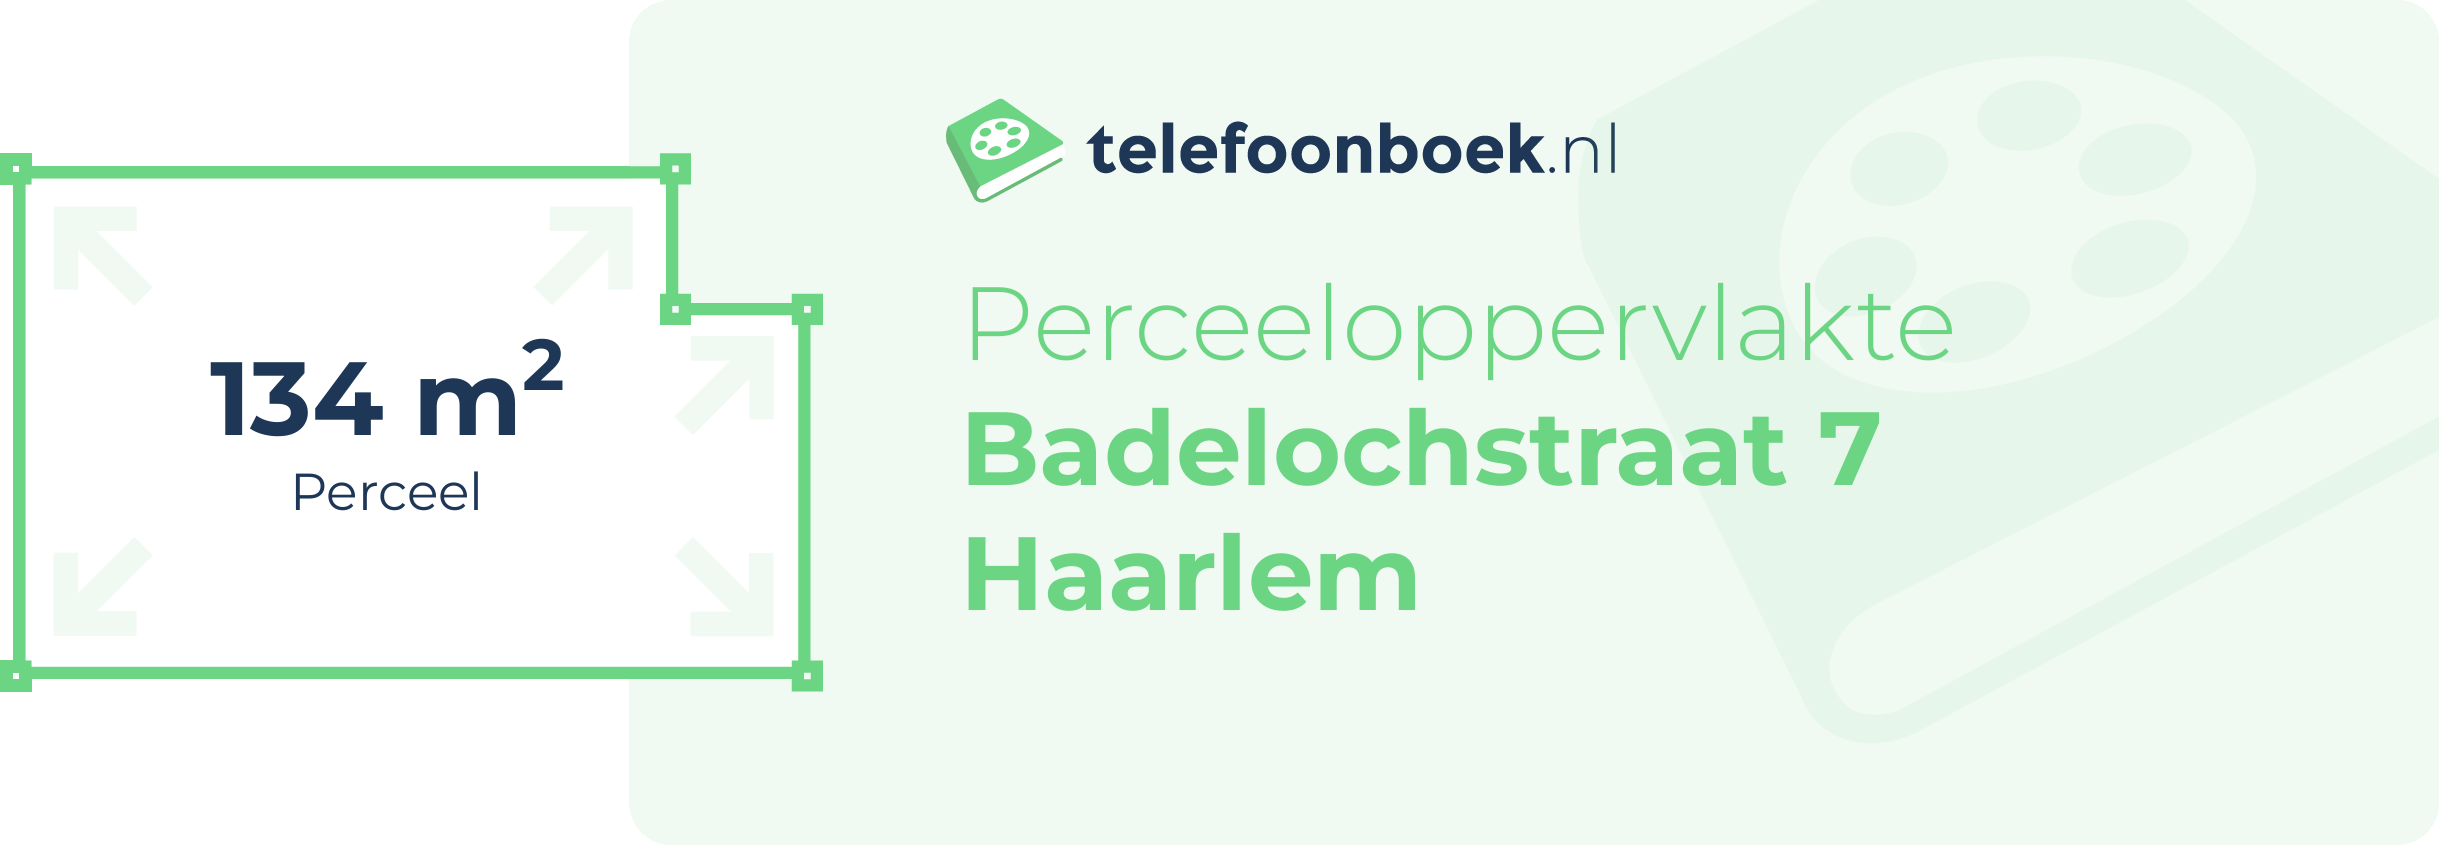 Perceeloppervlakte Badelochstraat 7 Haarlem